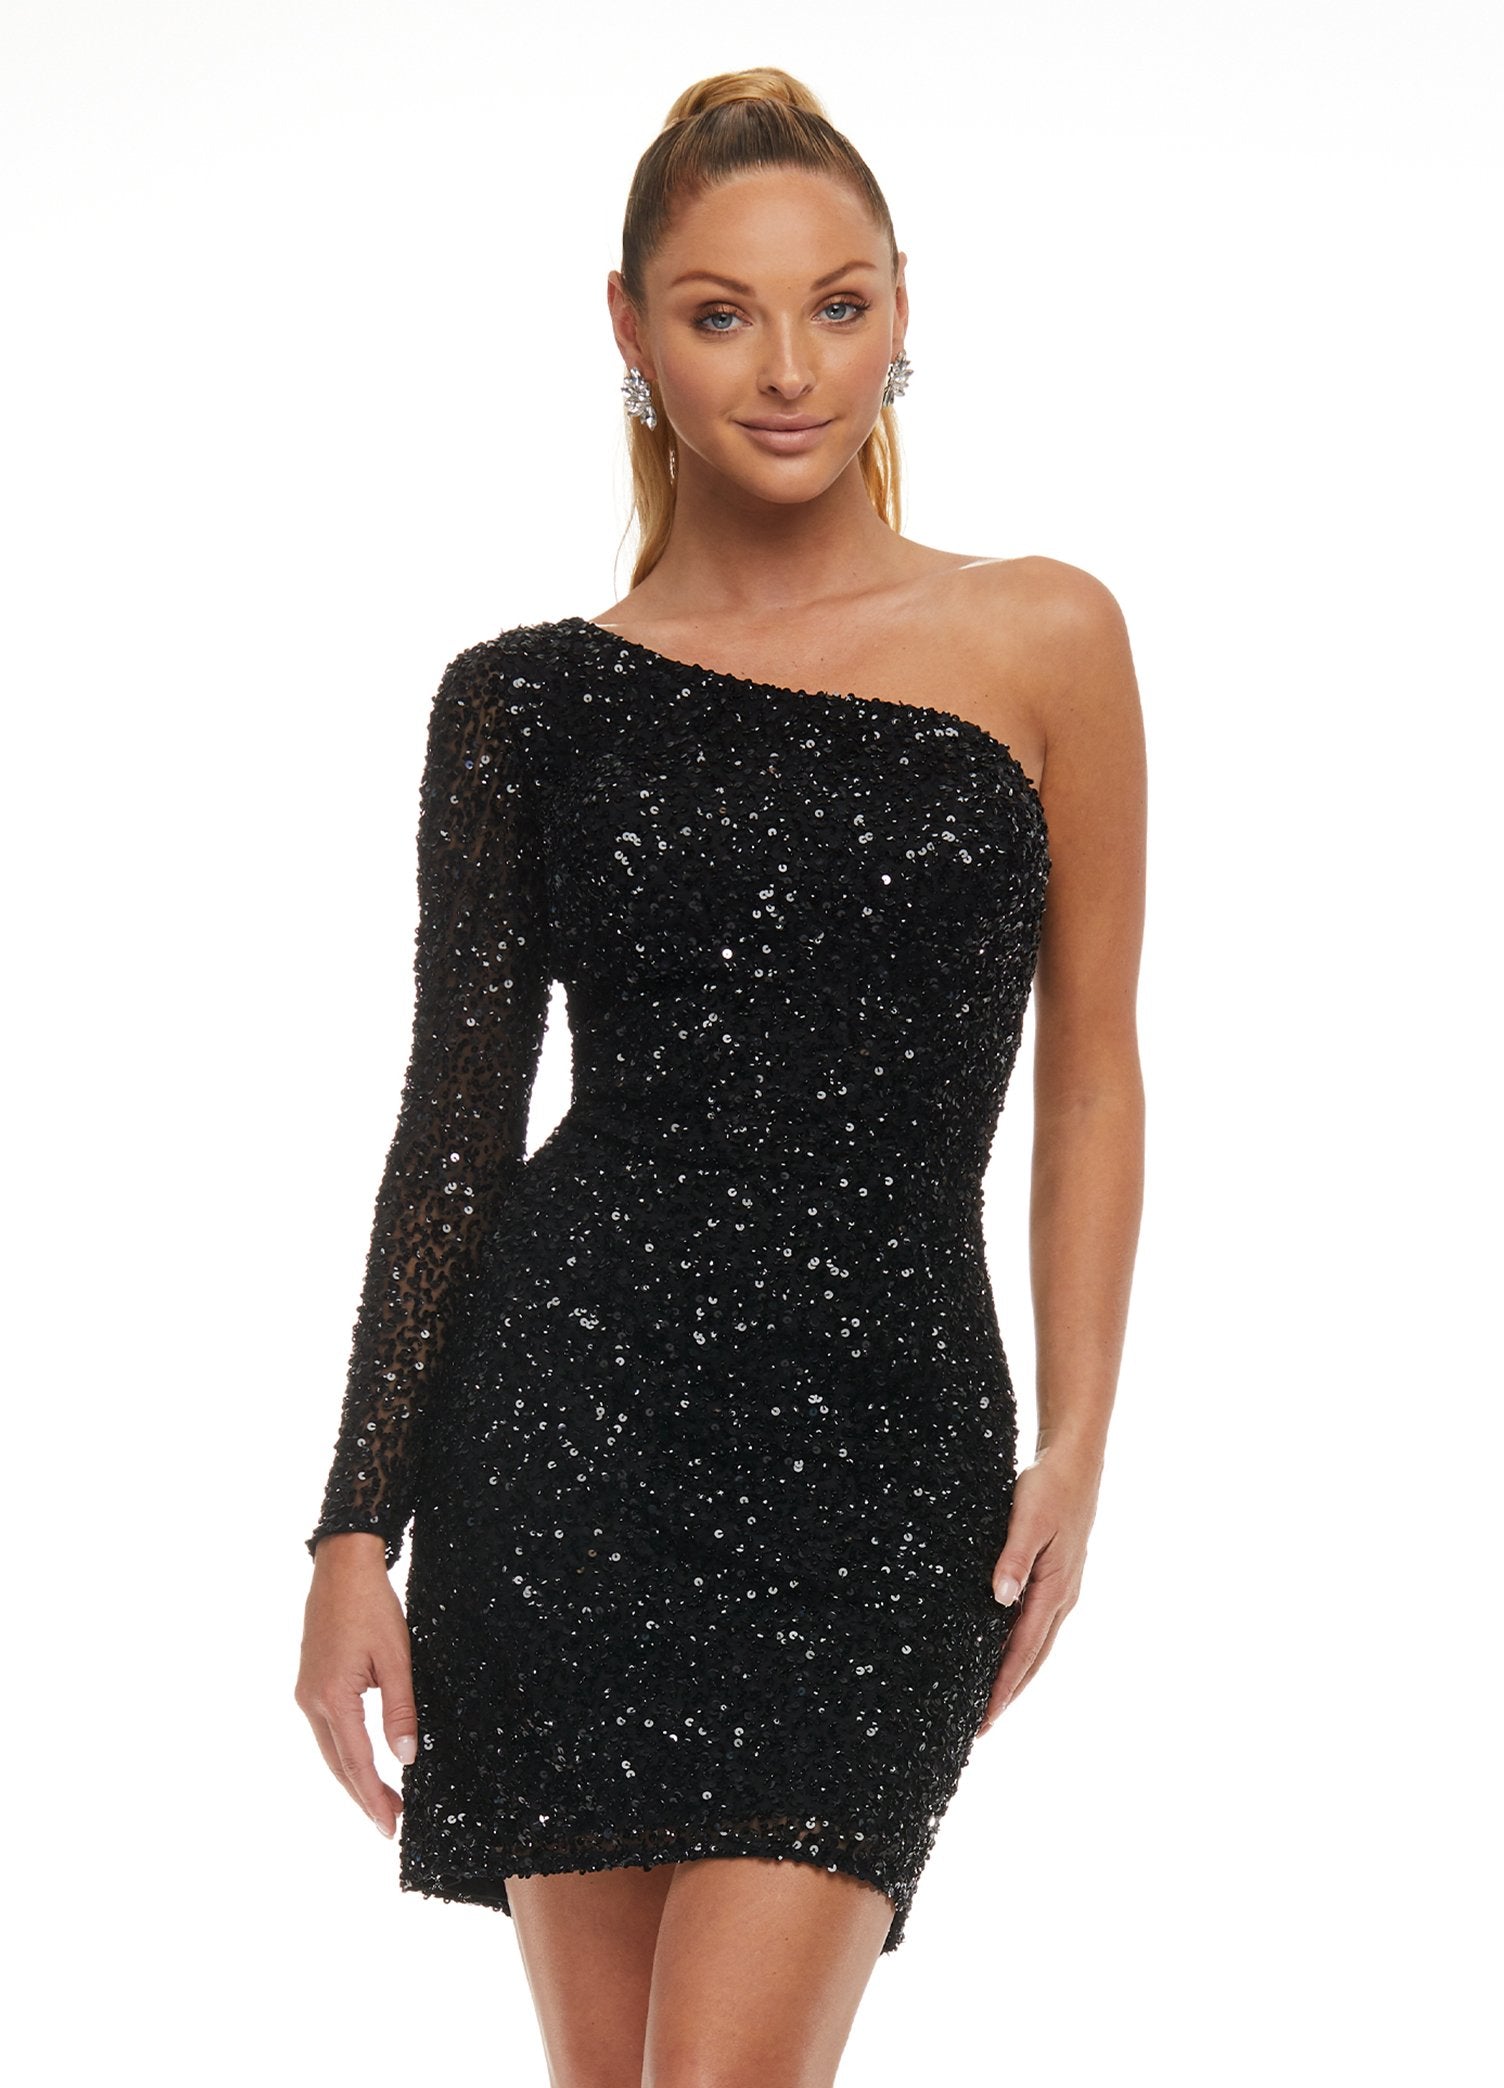 Ashley-Lauren-4457-black-cocktail-dress-front-one-shoulder-long-sleeve-fitted-sequin-homecoming-dress